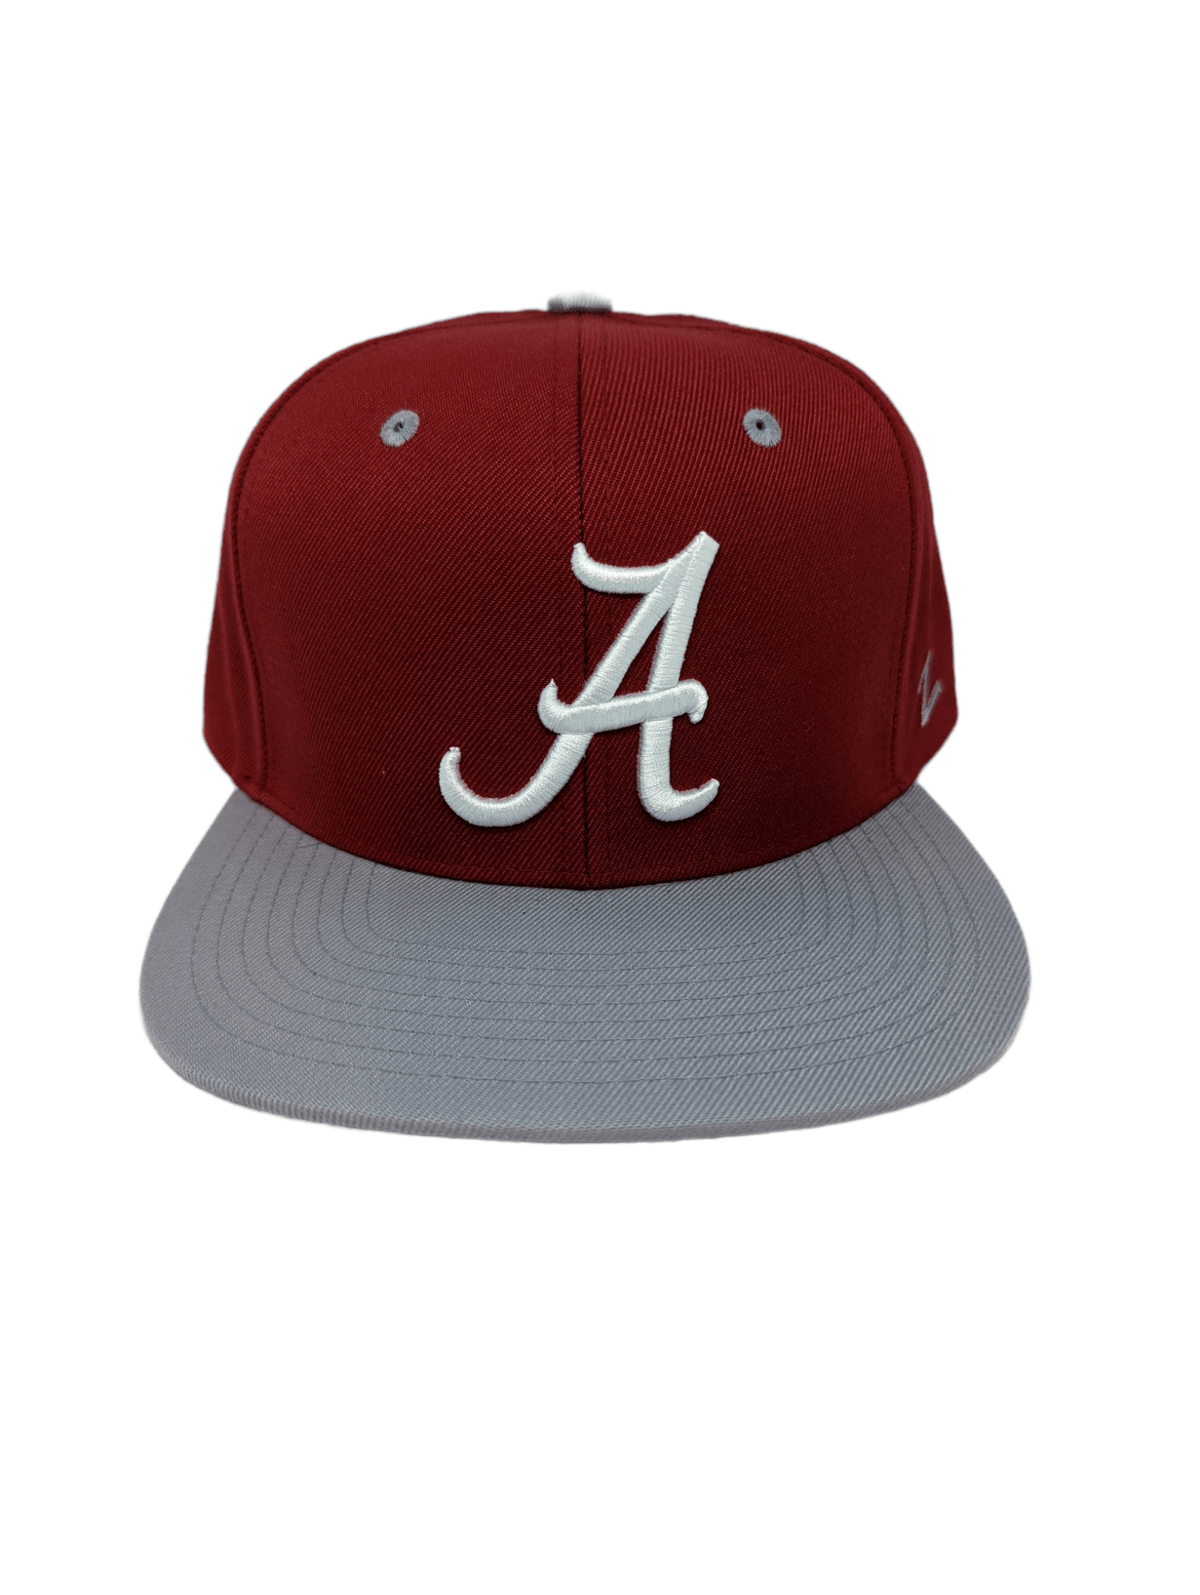 Zephyr Hats Alabama Z11 Snapback Hat